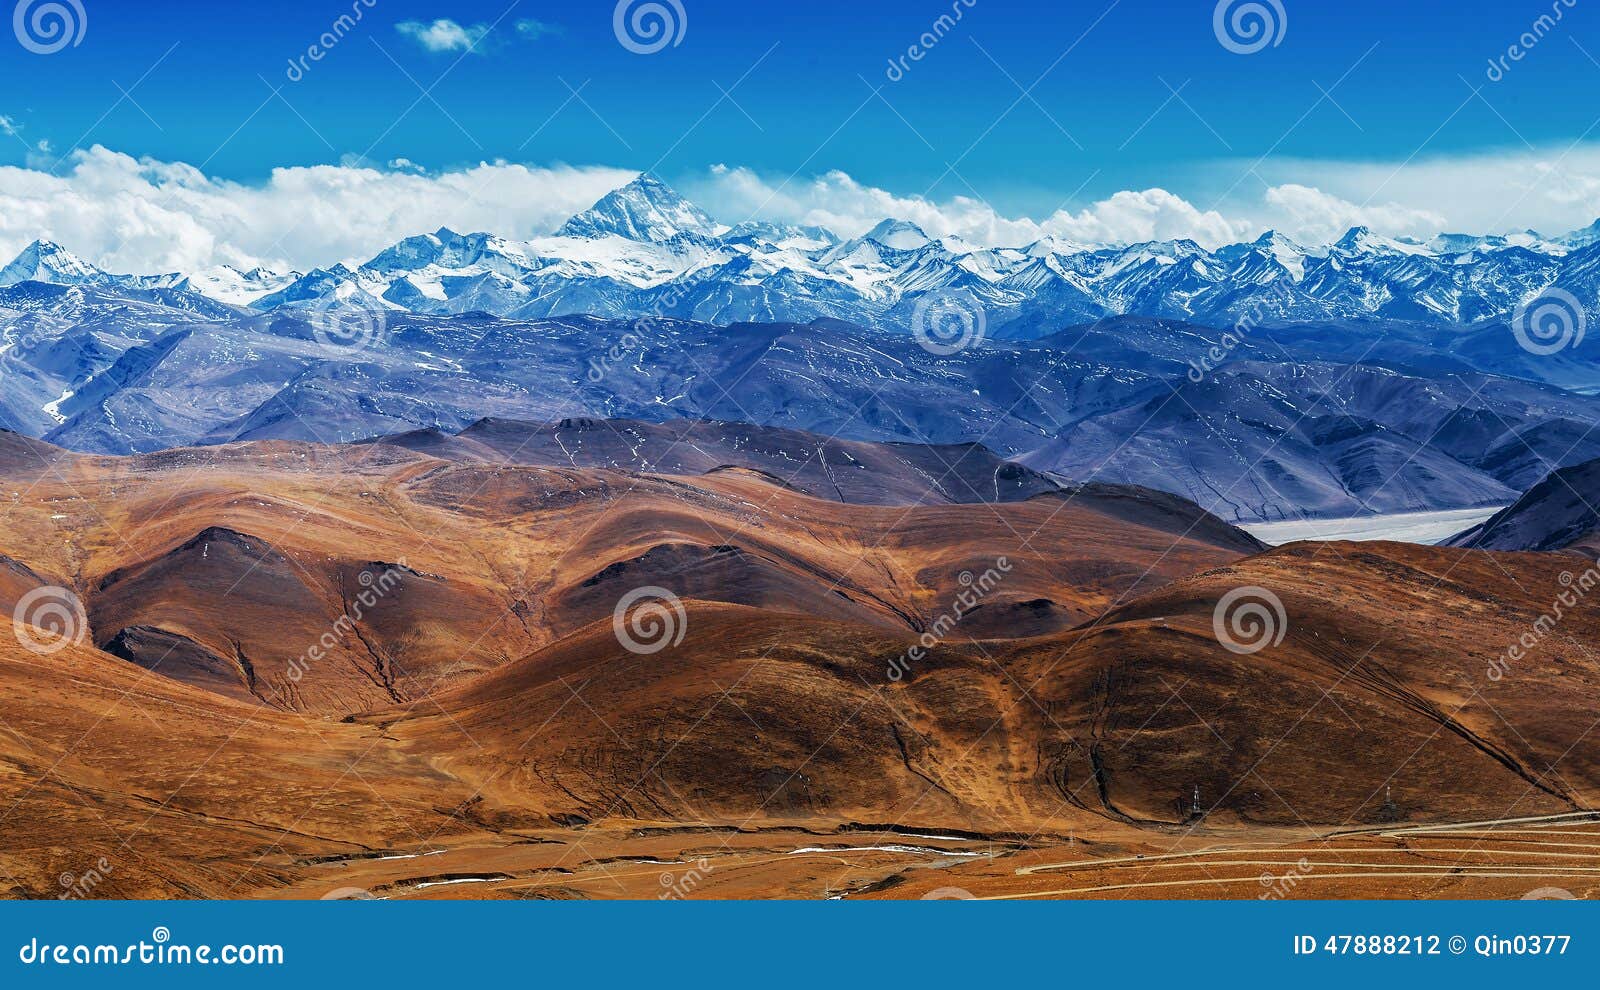 The Tibetan Landscape Stock Photo Image Of Plateau Province 47888212